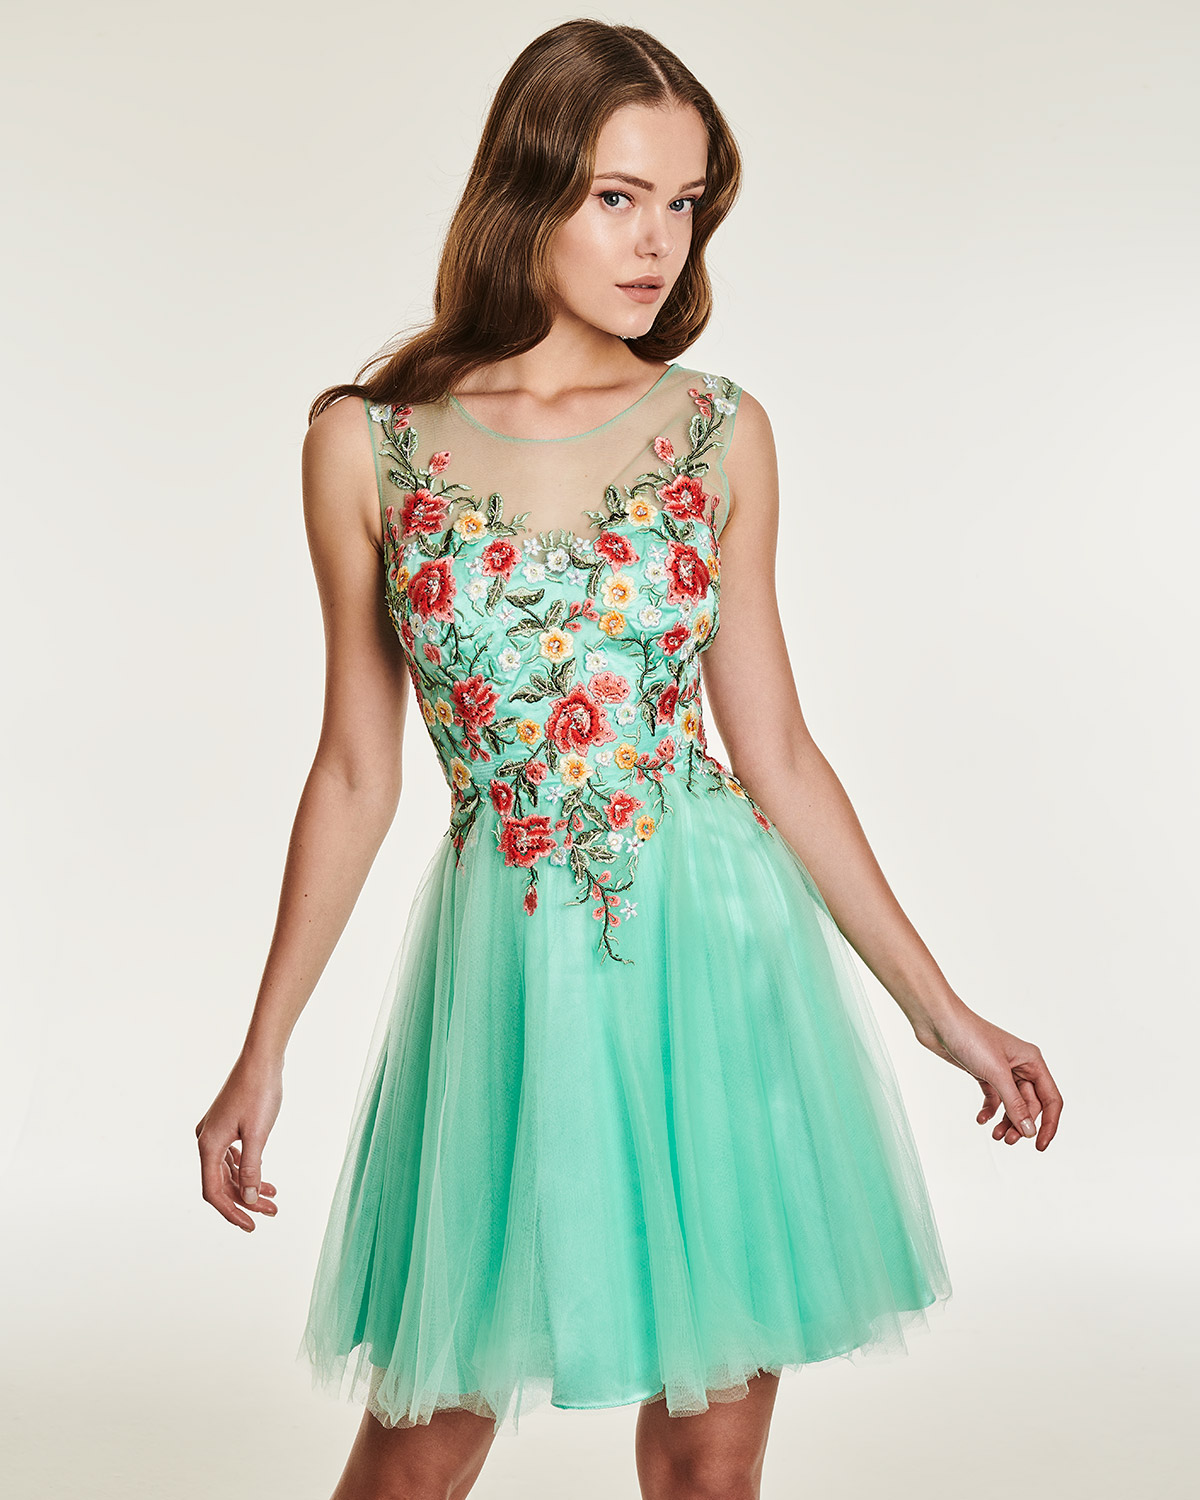 Cocktail Dresses / Short cocktail tulle dress with applique flowers